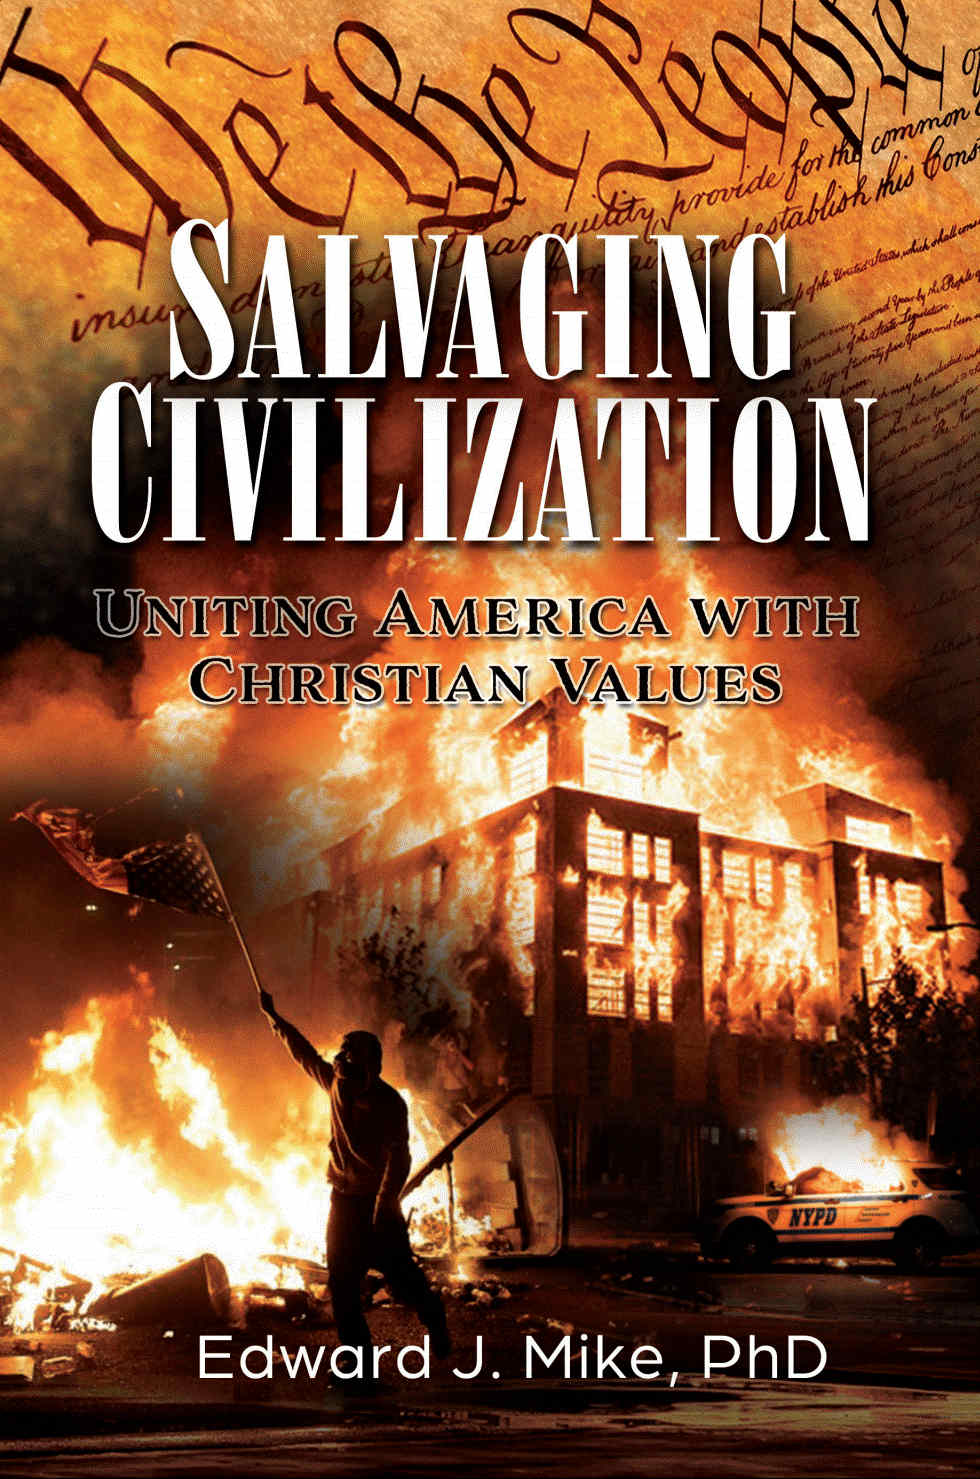 Buy Salvaging Civilization Book Image